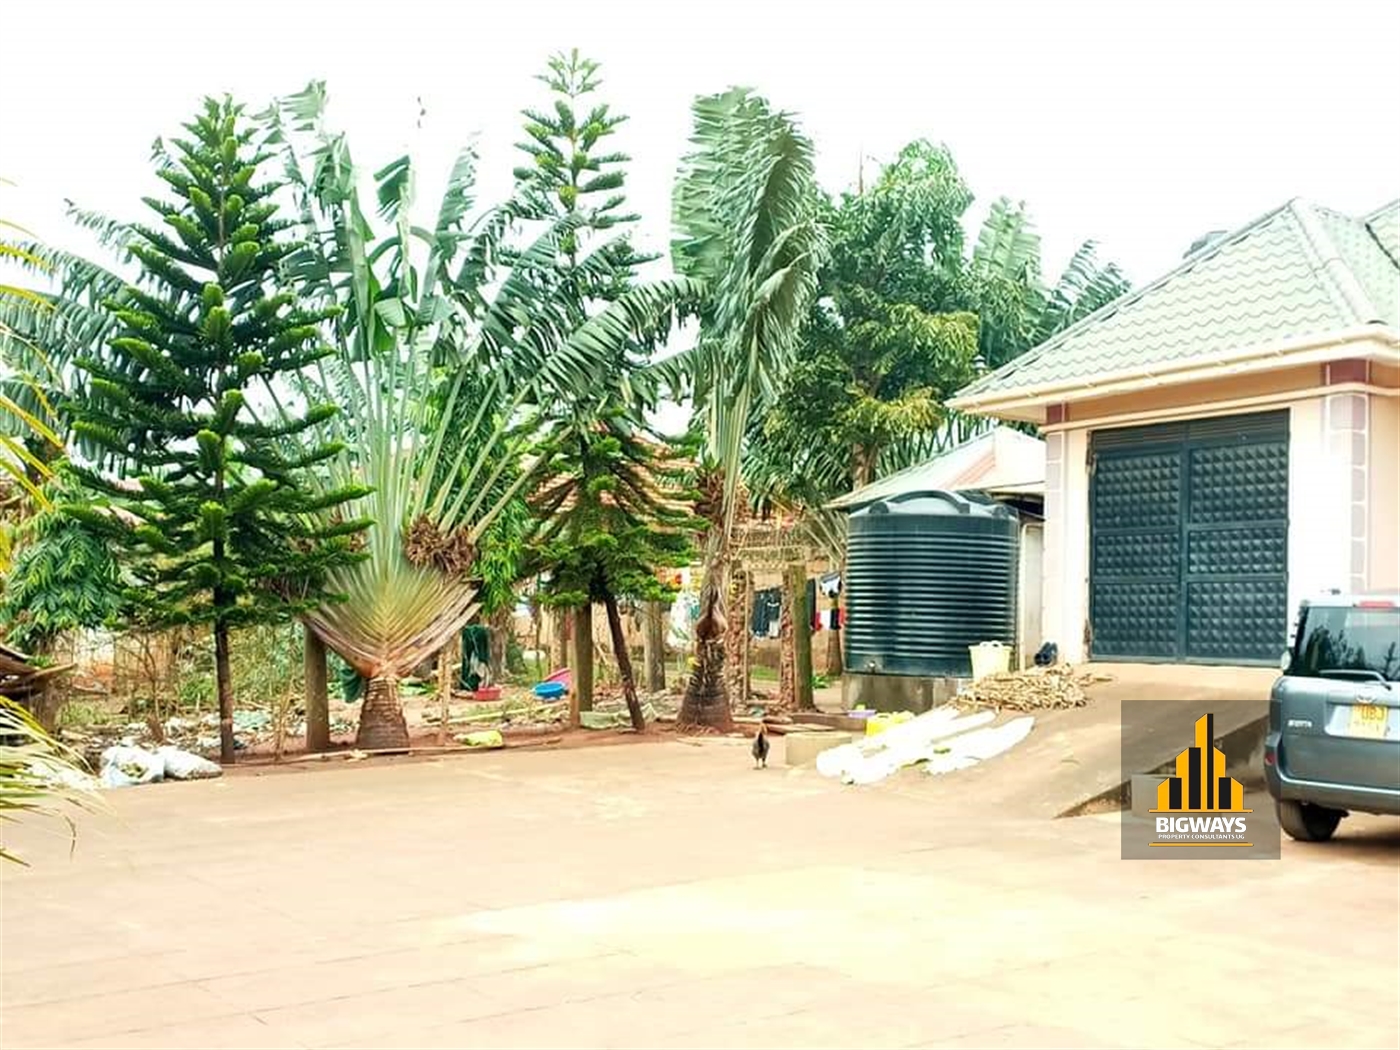 Bungalow for sale in Kungu Wakiso